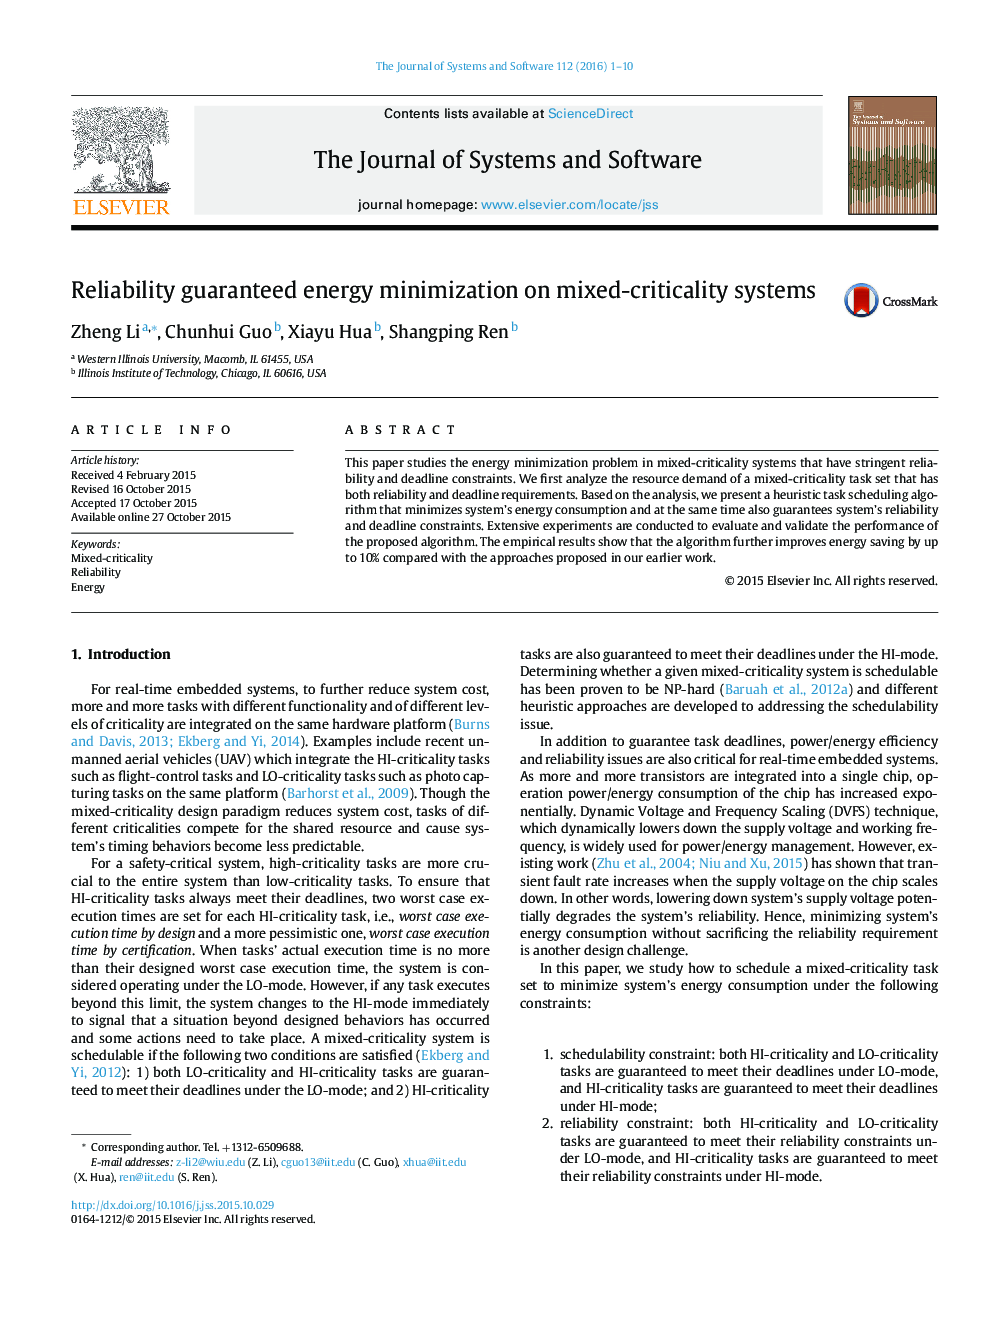 Reliability guaranteed energy minimization on mixed-criticality systems